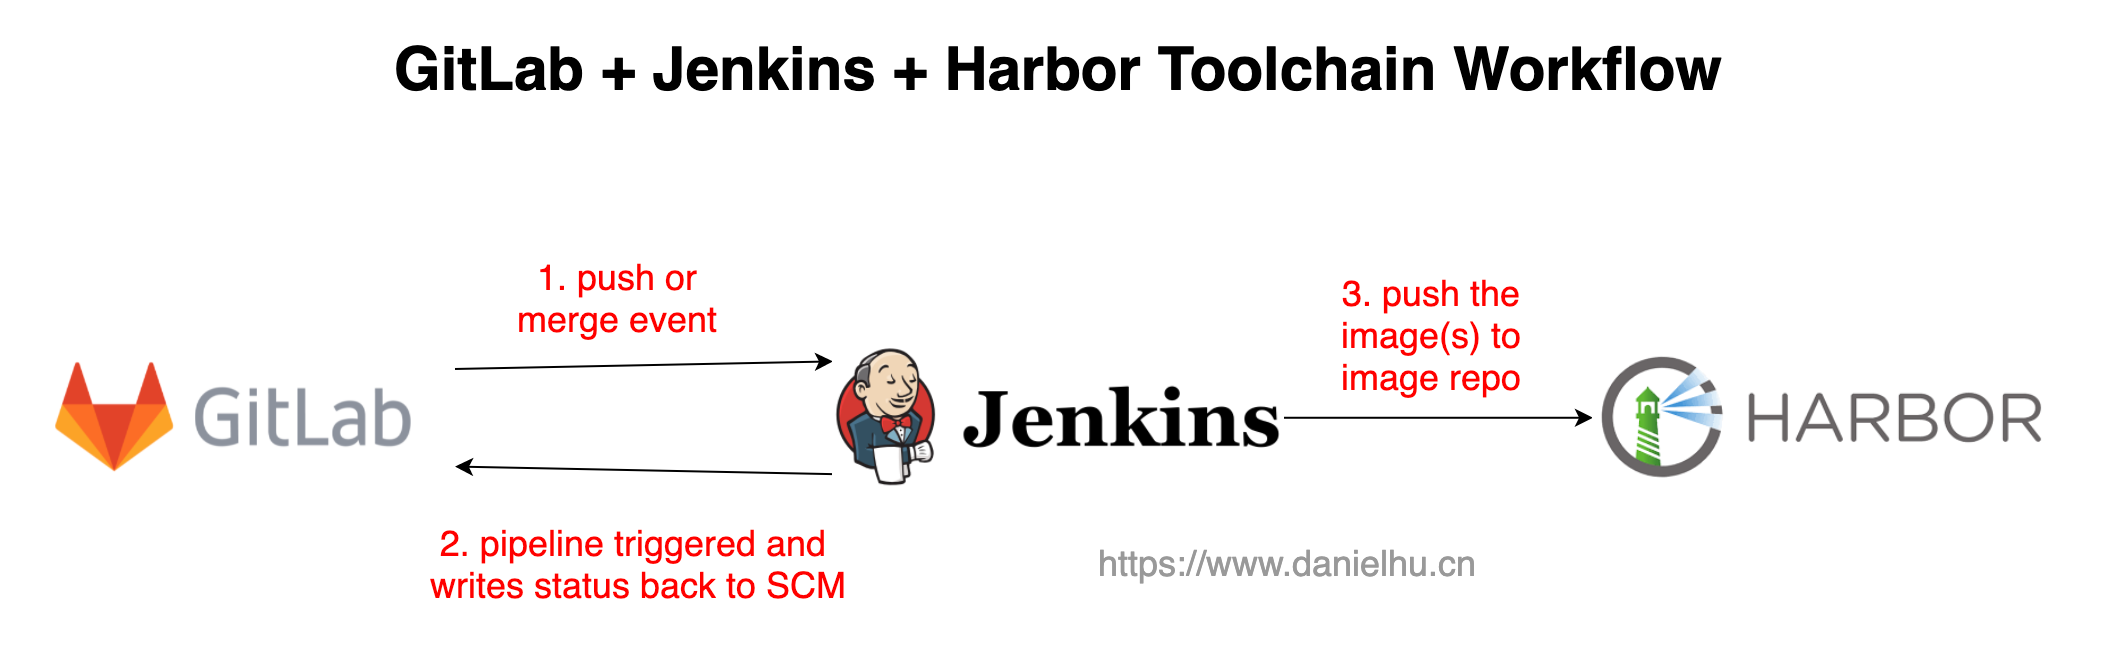 GitLab + Jenkins + Harbor Toolchain Workflow